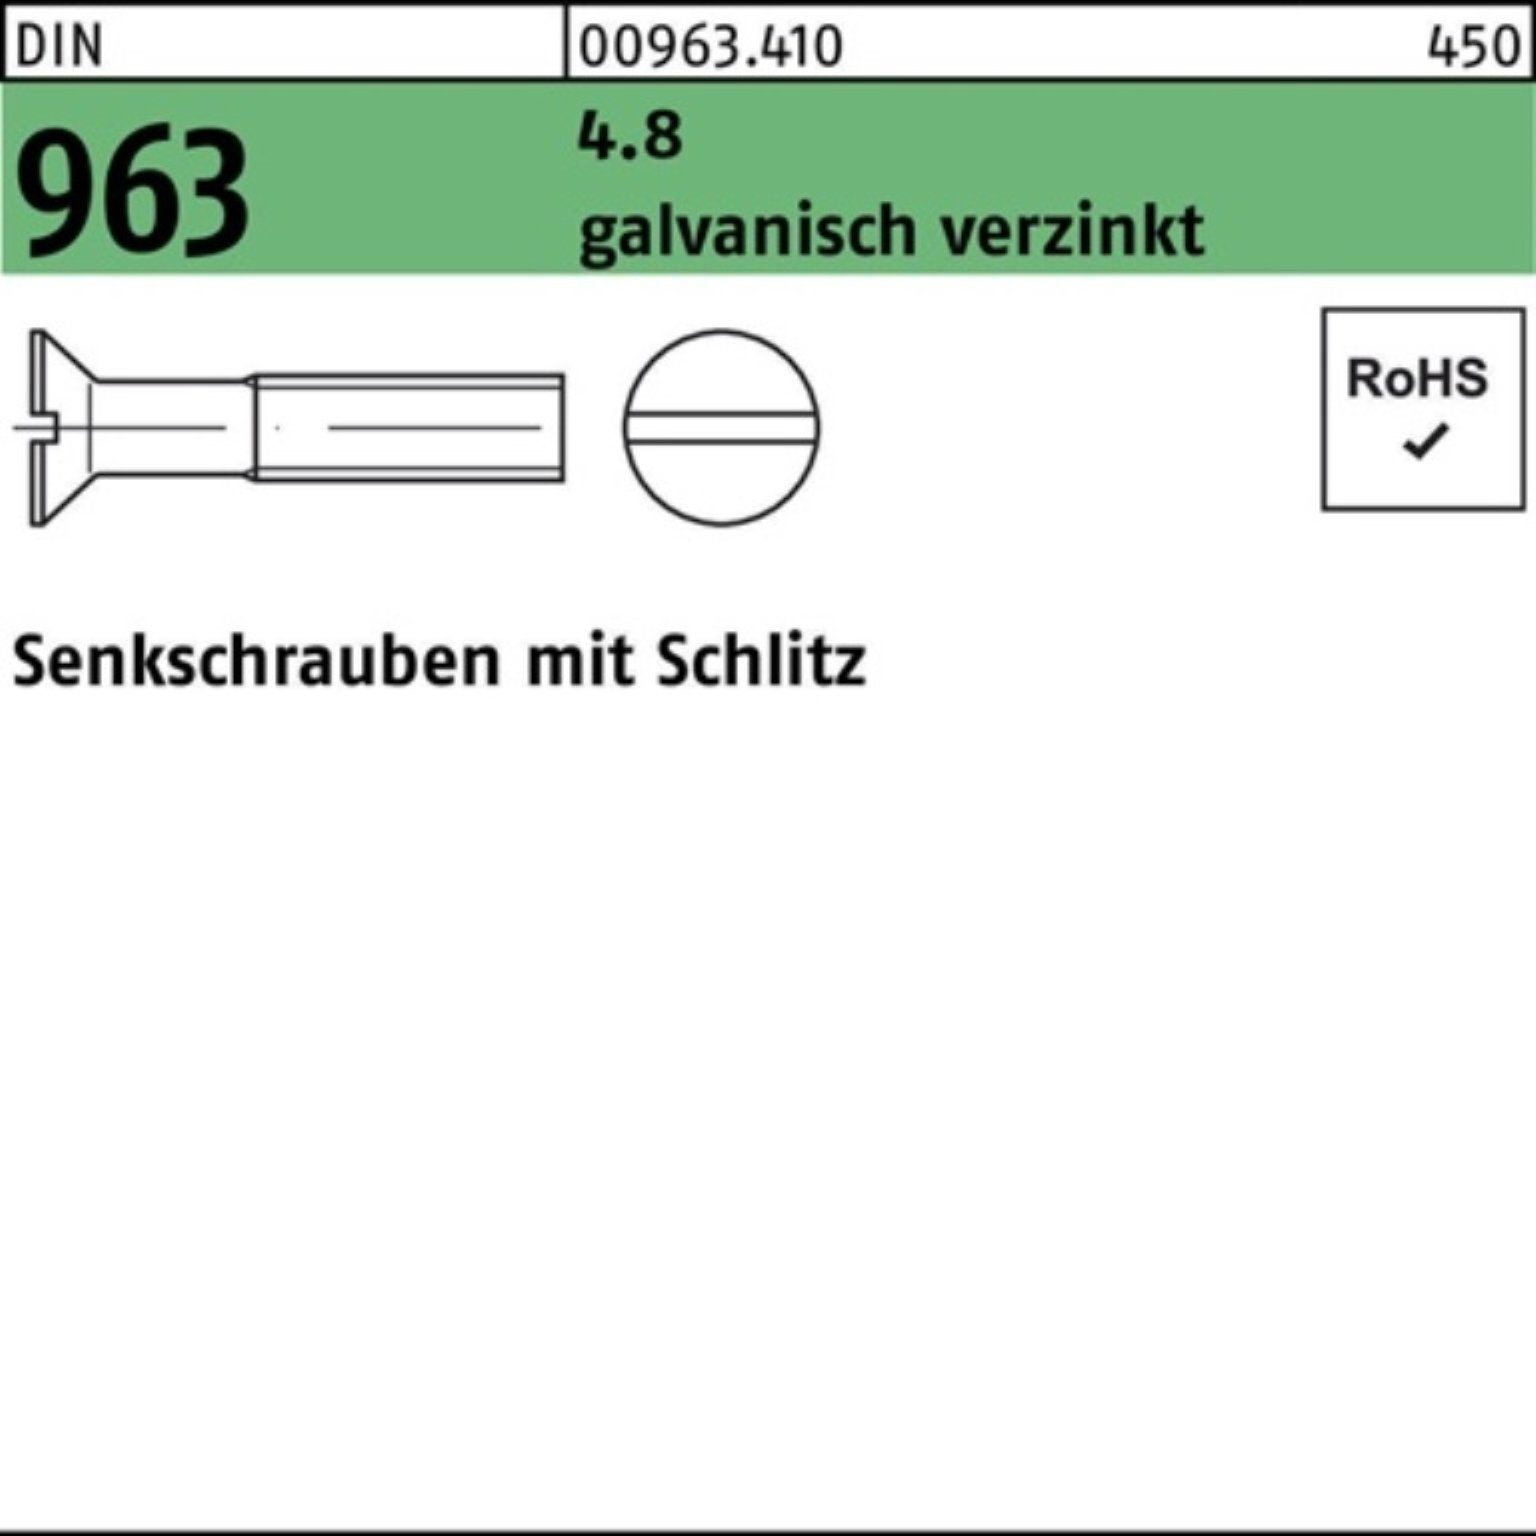 Reyher Senkschraube 100er Pack Senkschraube DIN 963 Schlitz M8x 55 4.8 galv.verz. 100 Stü